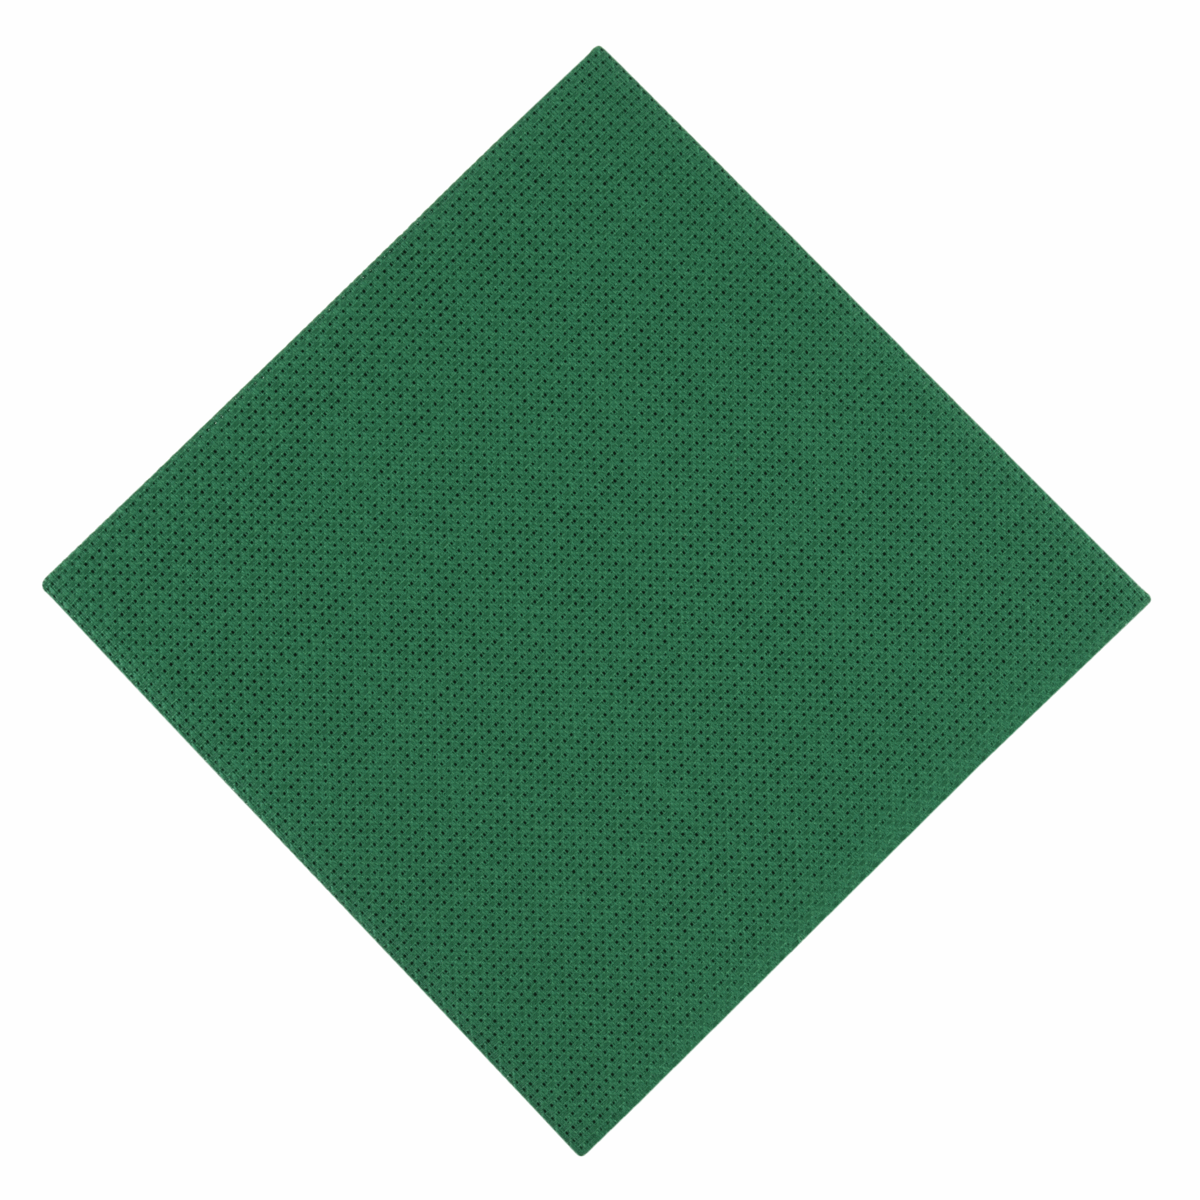 Trimits Green Needlecraft Fabric - Aida 14 Count 45 x 30cm